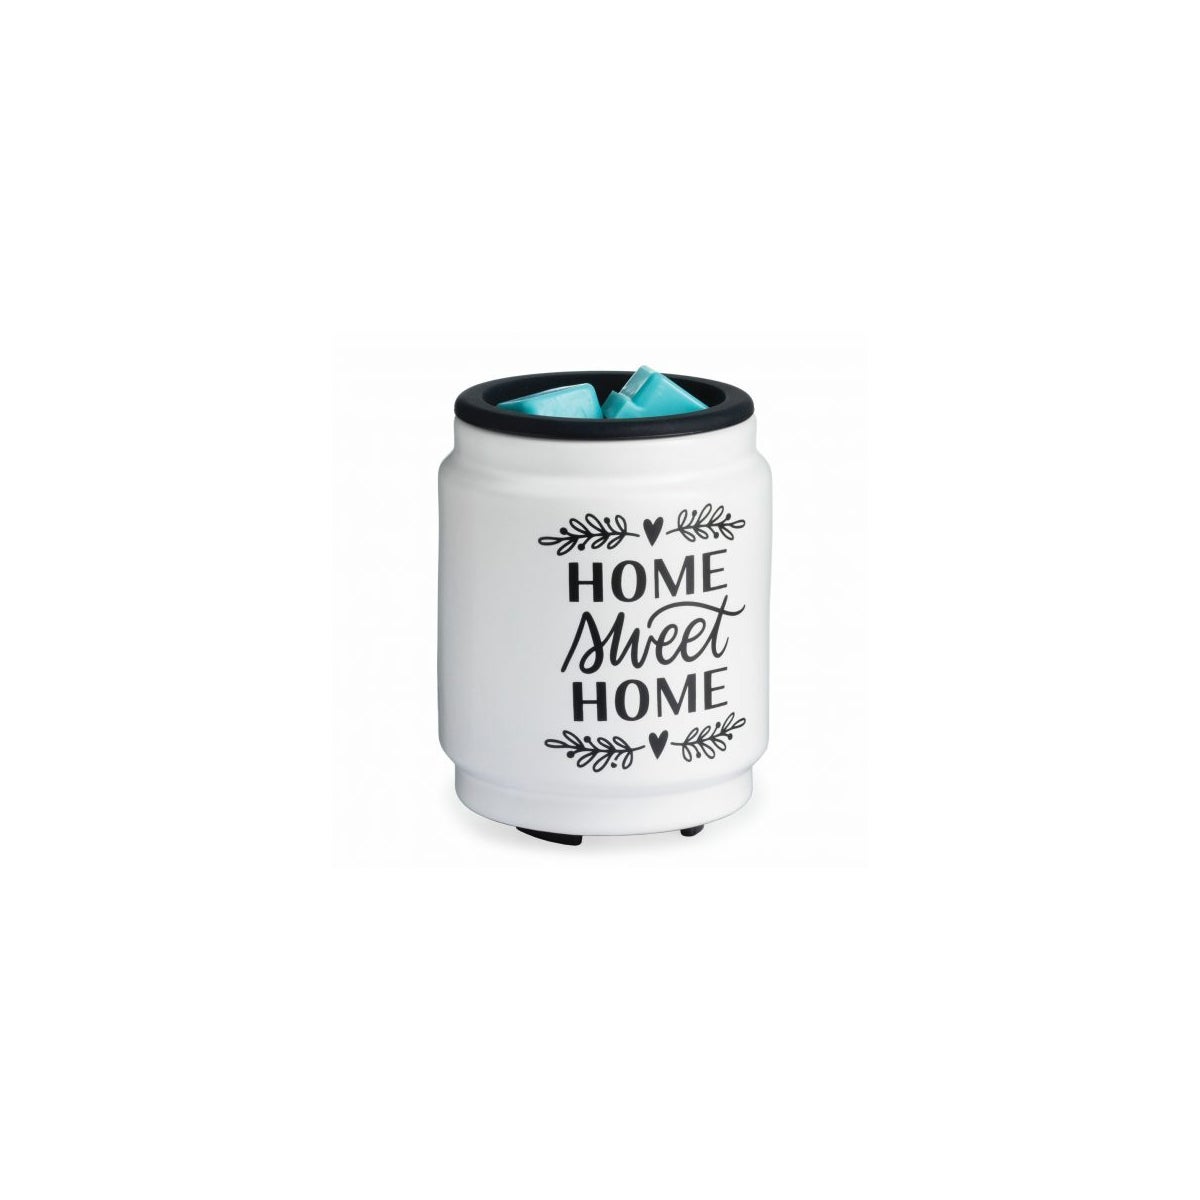 Flip Dish Fragrance Warmer - Home Sweet Home